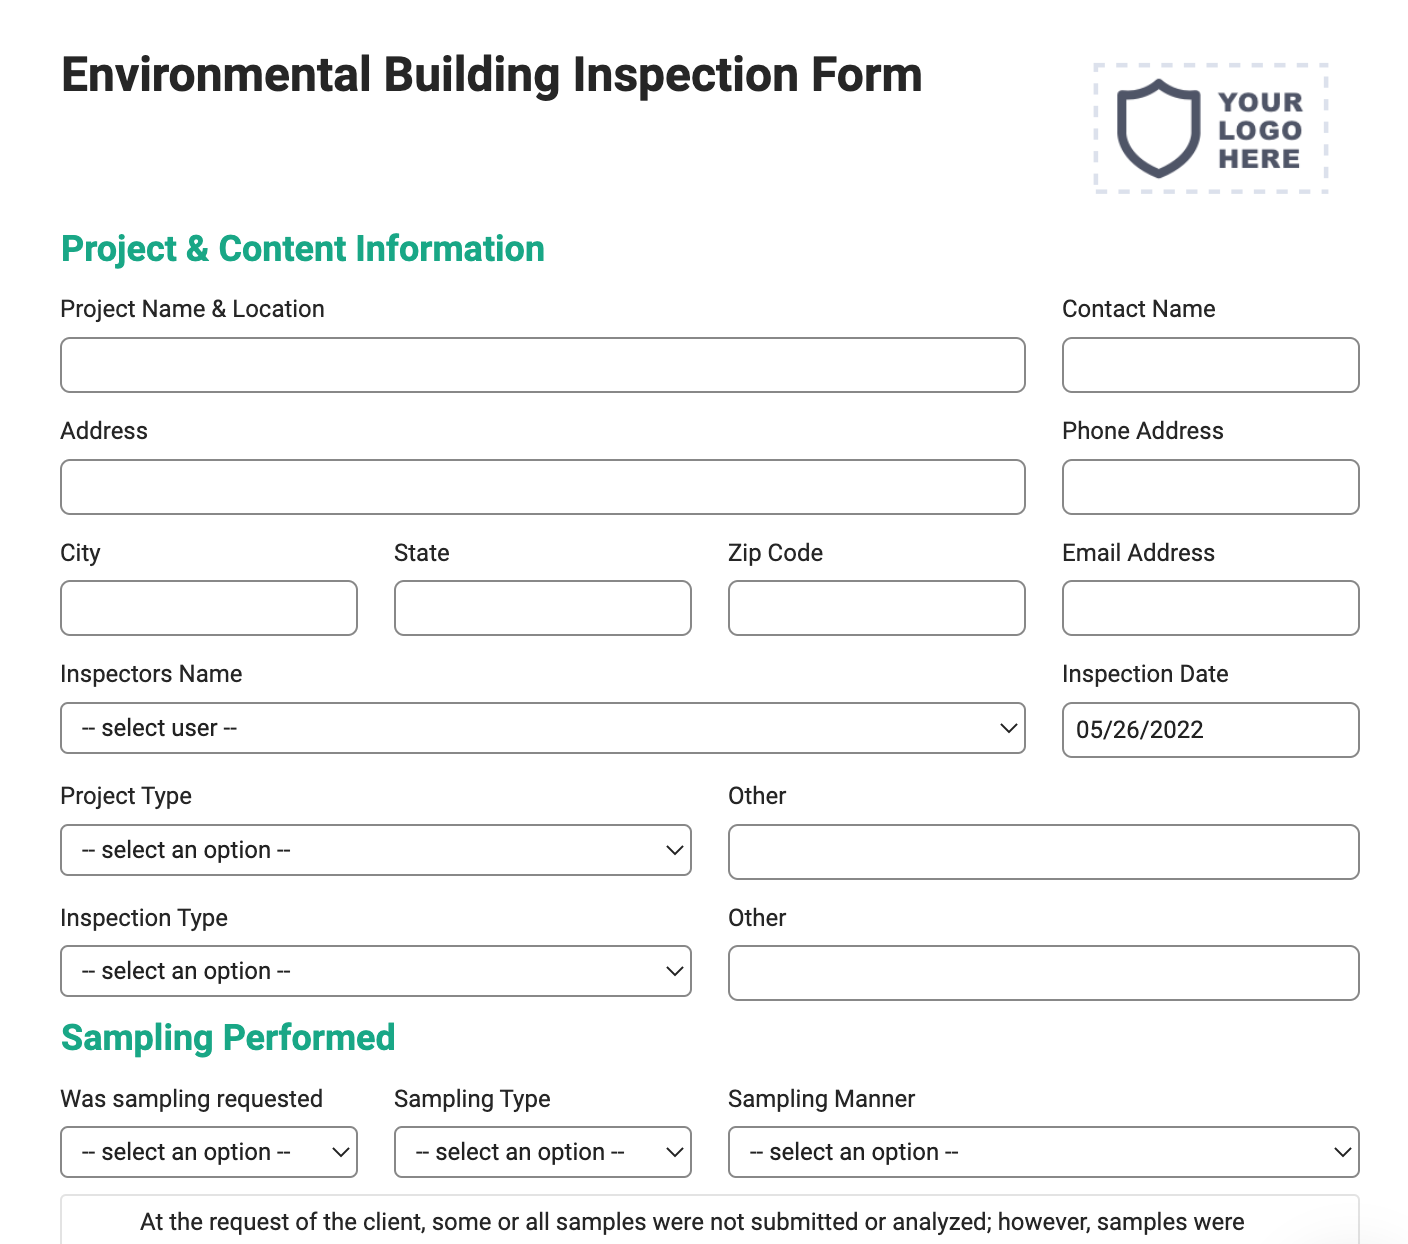 IAQ Environmental Building Inspection Form